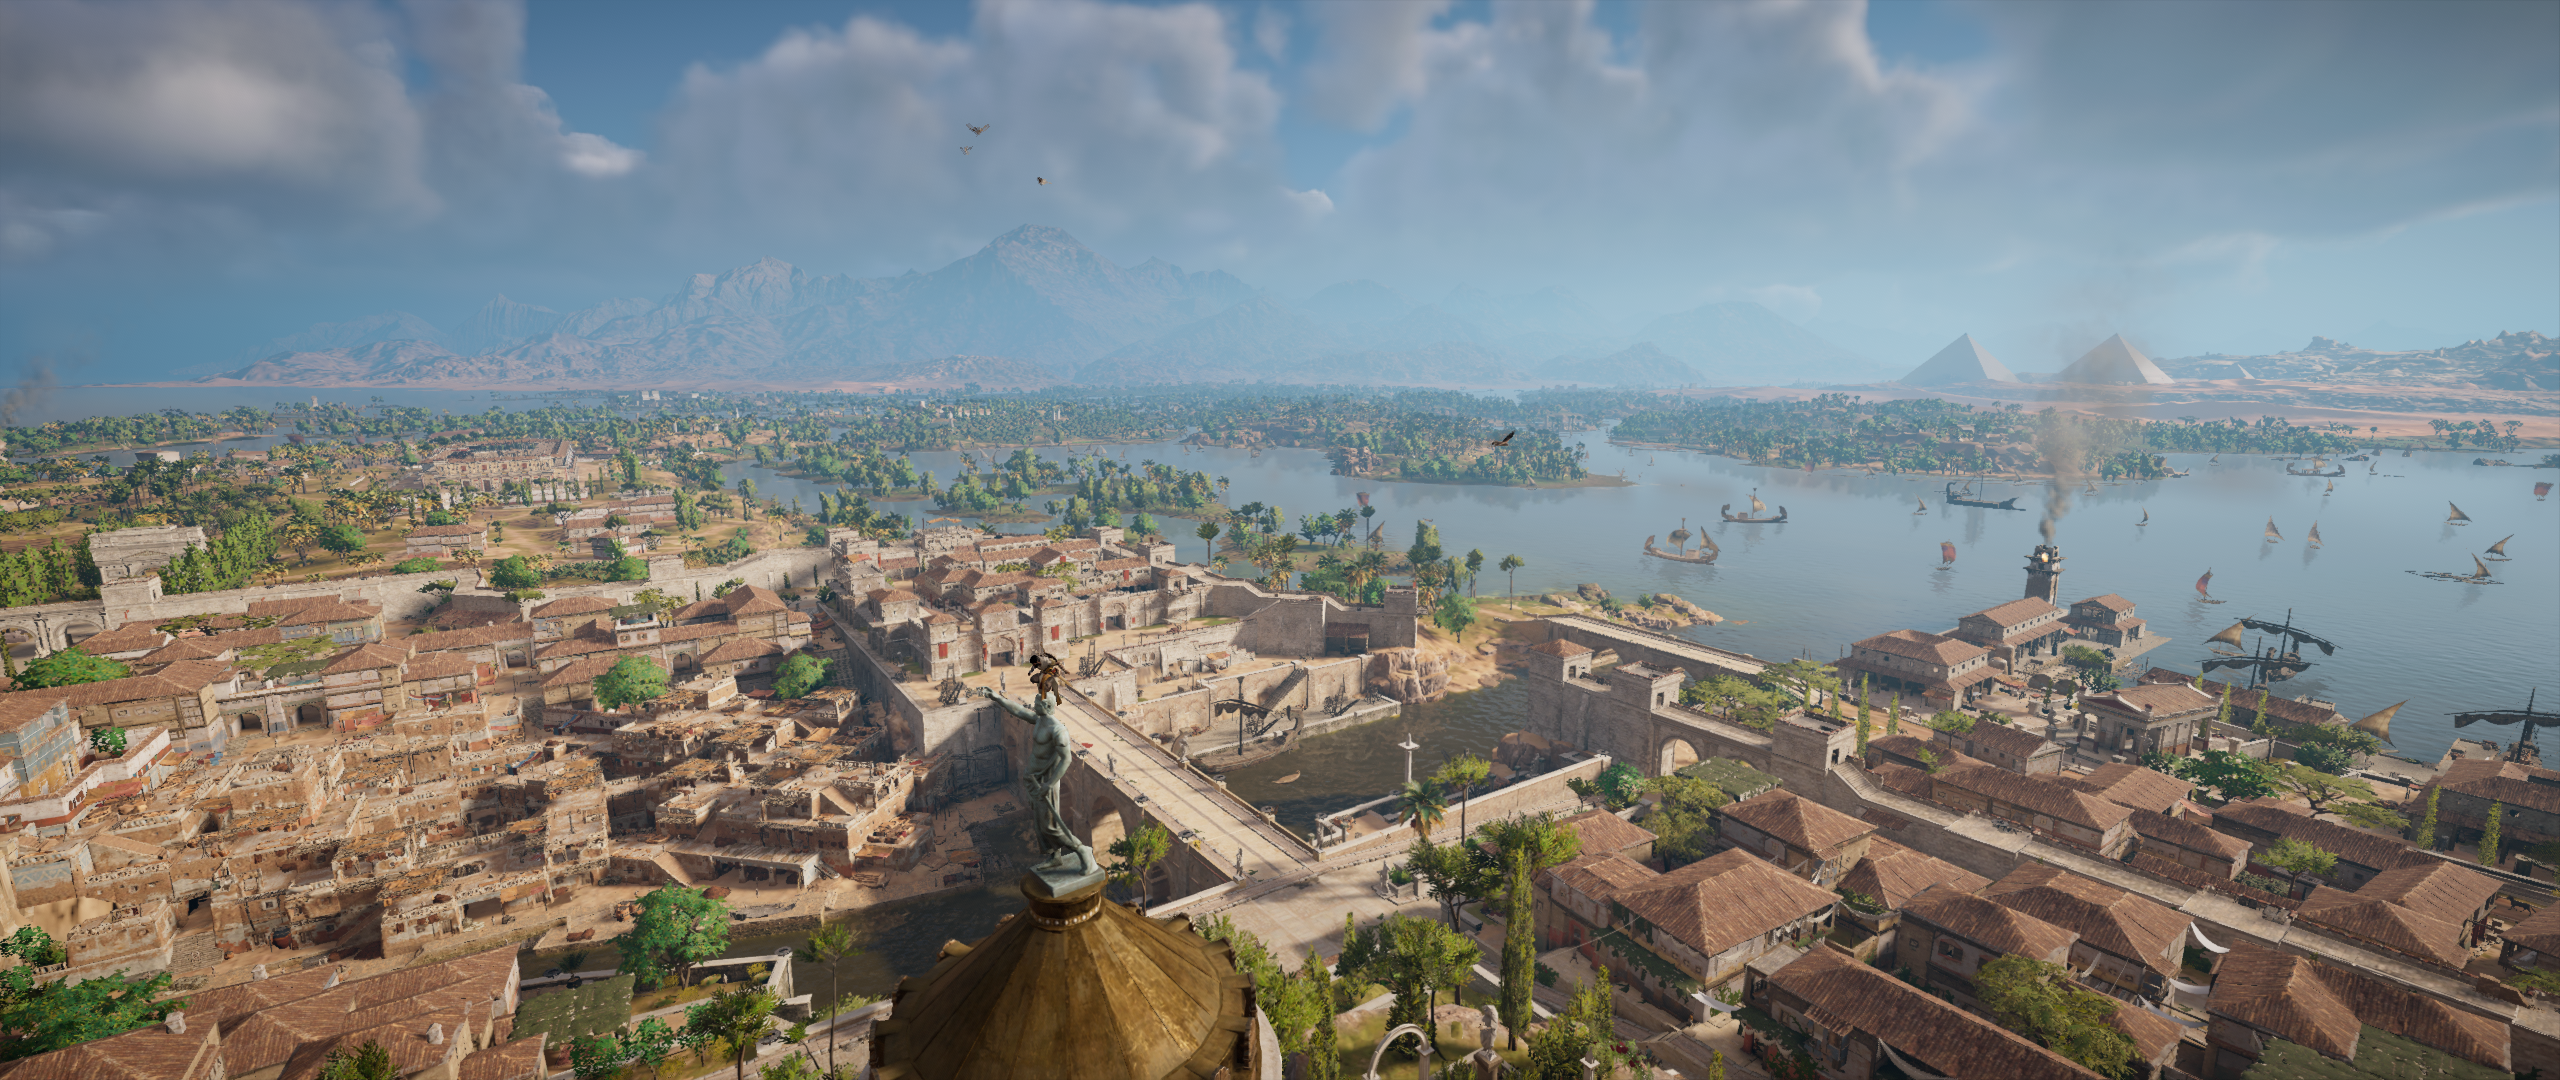 Assassins Creed Assassins Creed Origins Bayek Landscape Egypt Pyramids Of Giza Horizon 2560x1080